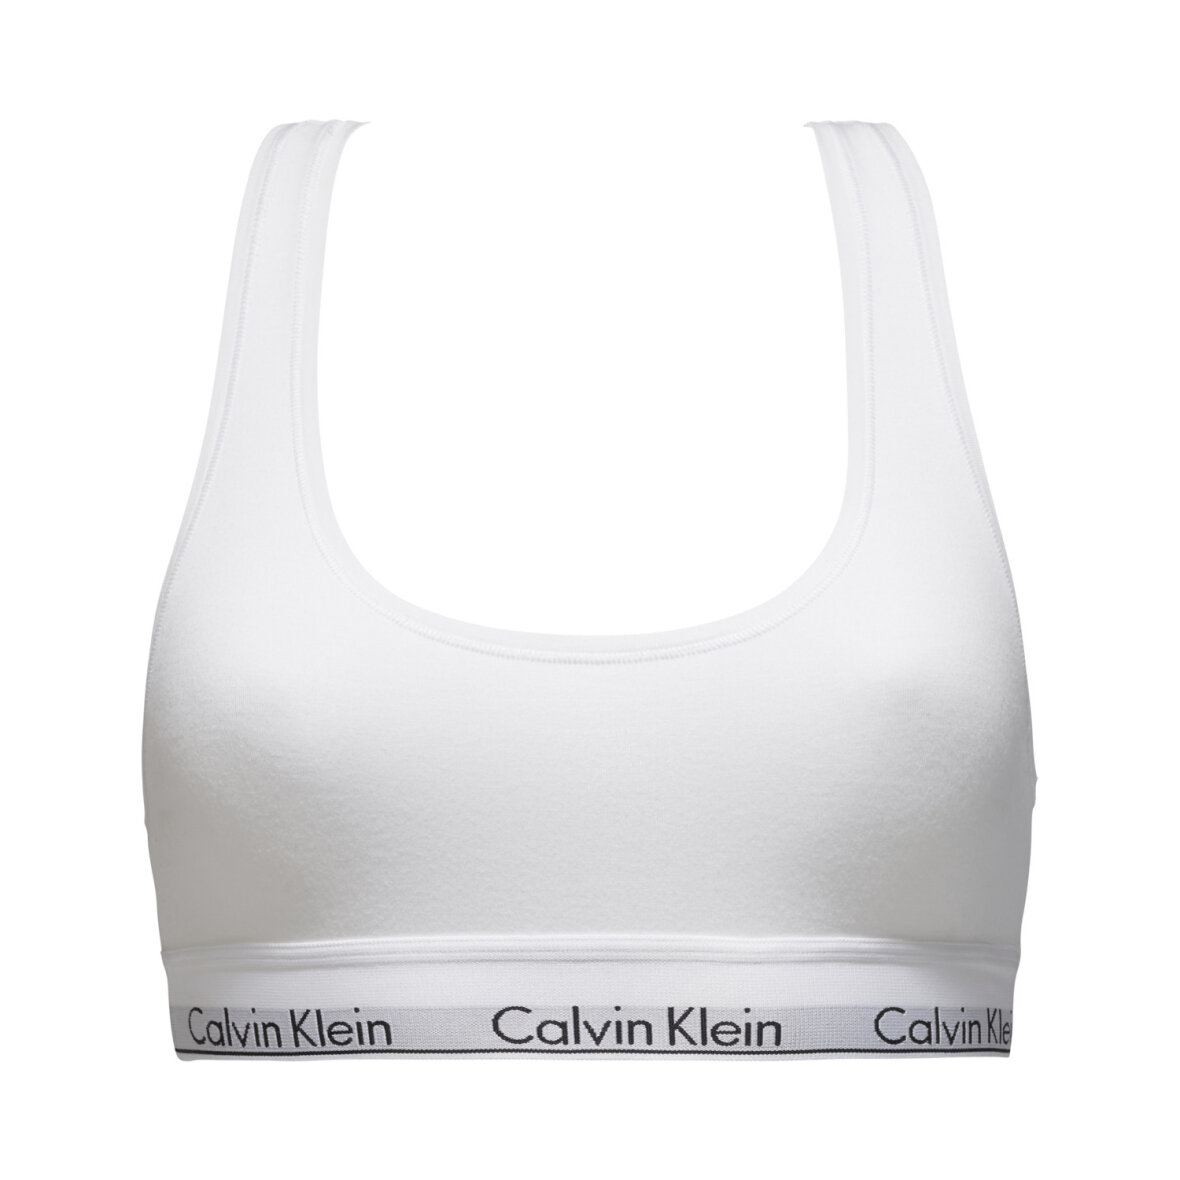 tyveri Medfølelse linned Calvin Klein Bralette top Calvin Klein - Shop online nu